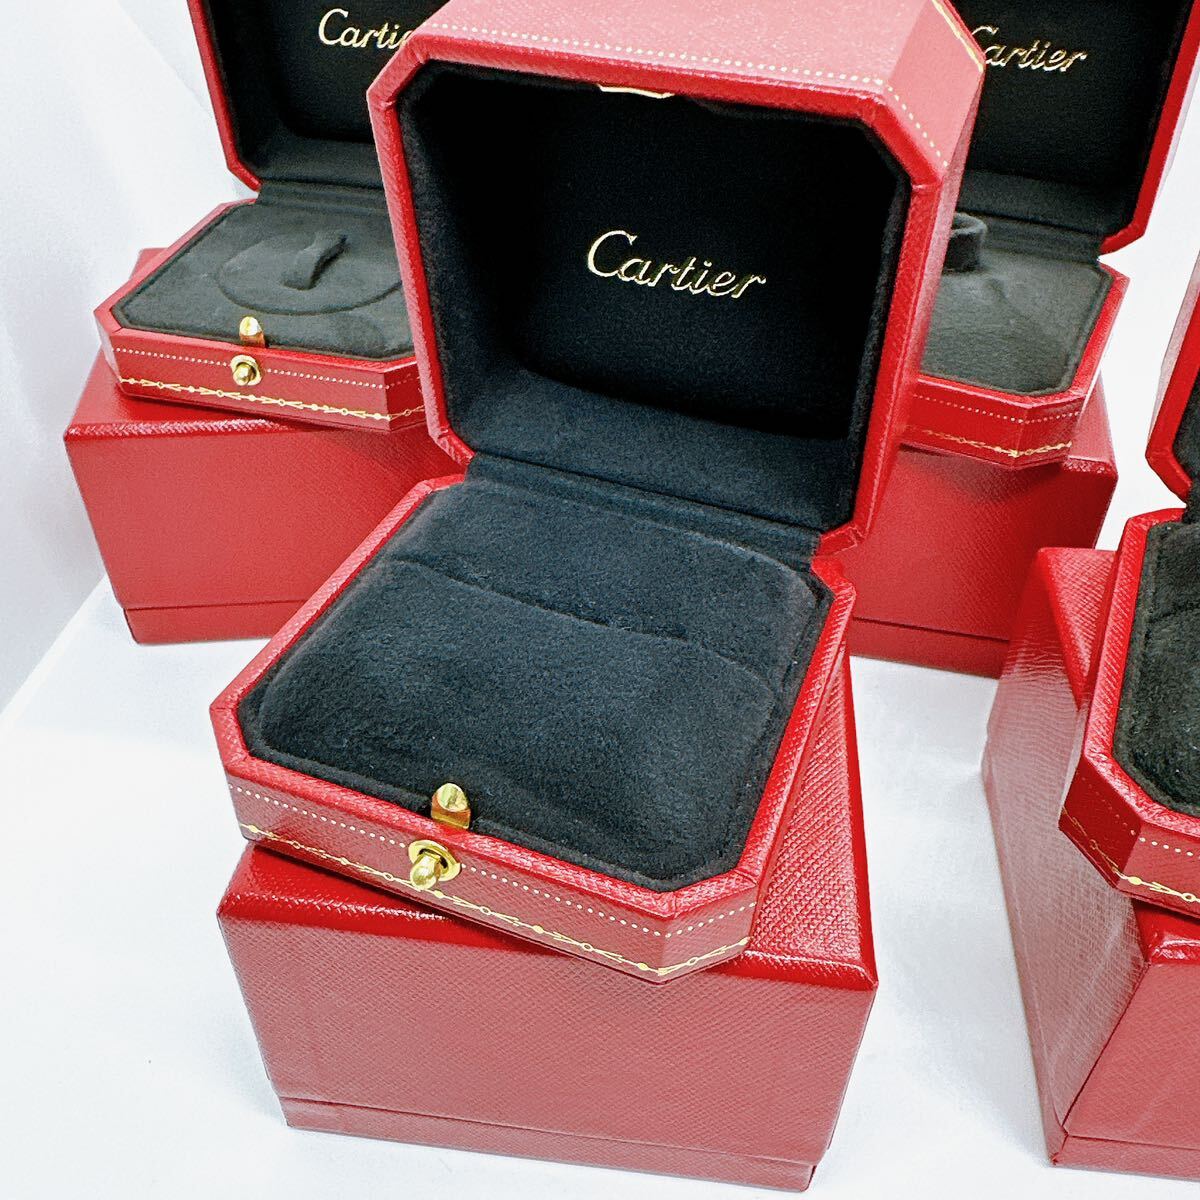 04087 ... Cartier  коробка  ... коробка   кейс   коробка   оригинальный   кольцо    кольцо   5 шт.   комплект  